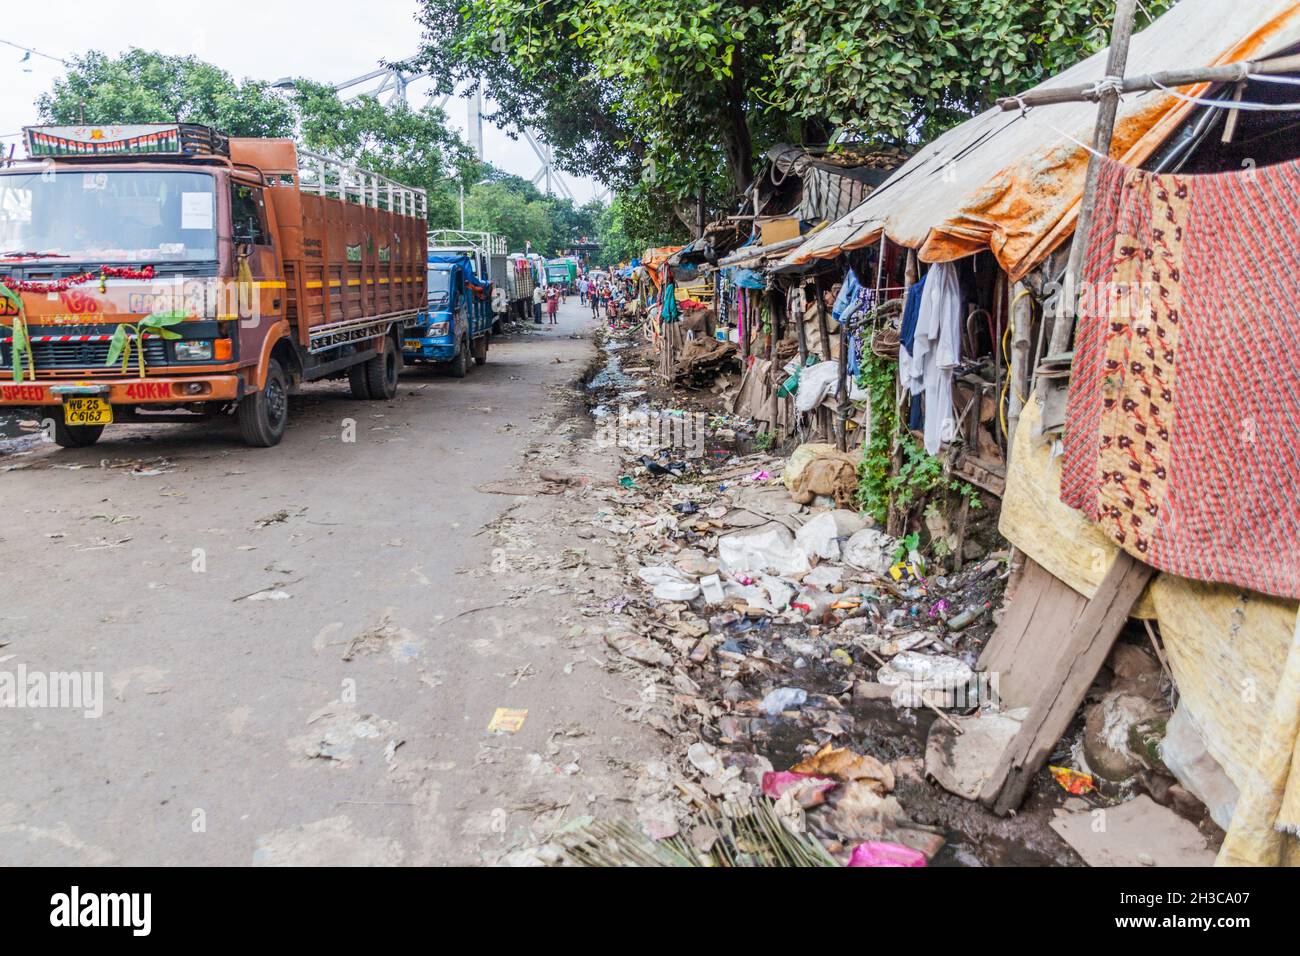 KOLKATA, INDIA - OCTOBER 31, 2016: Small slum in the center of Kolkata, India Stock Photo